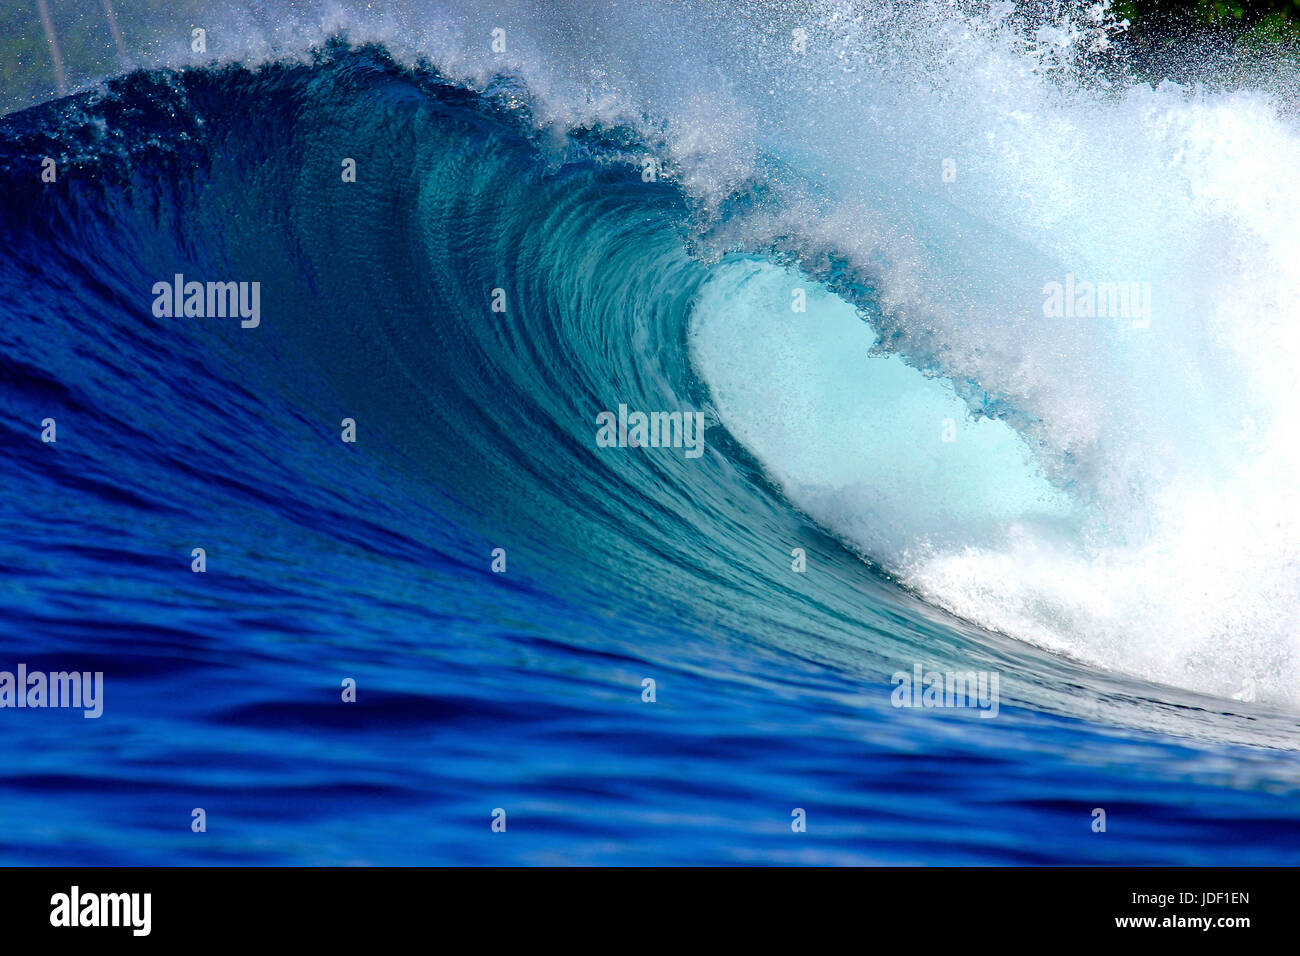 Blue ocean surfing wave Stock Photo